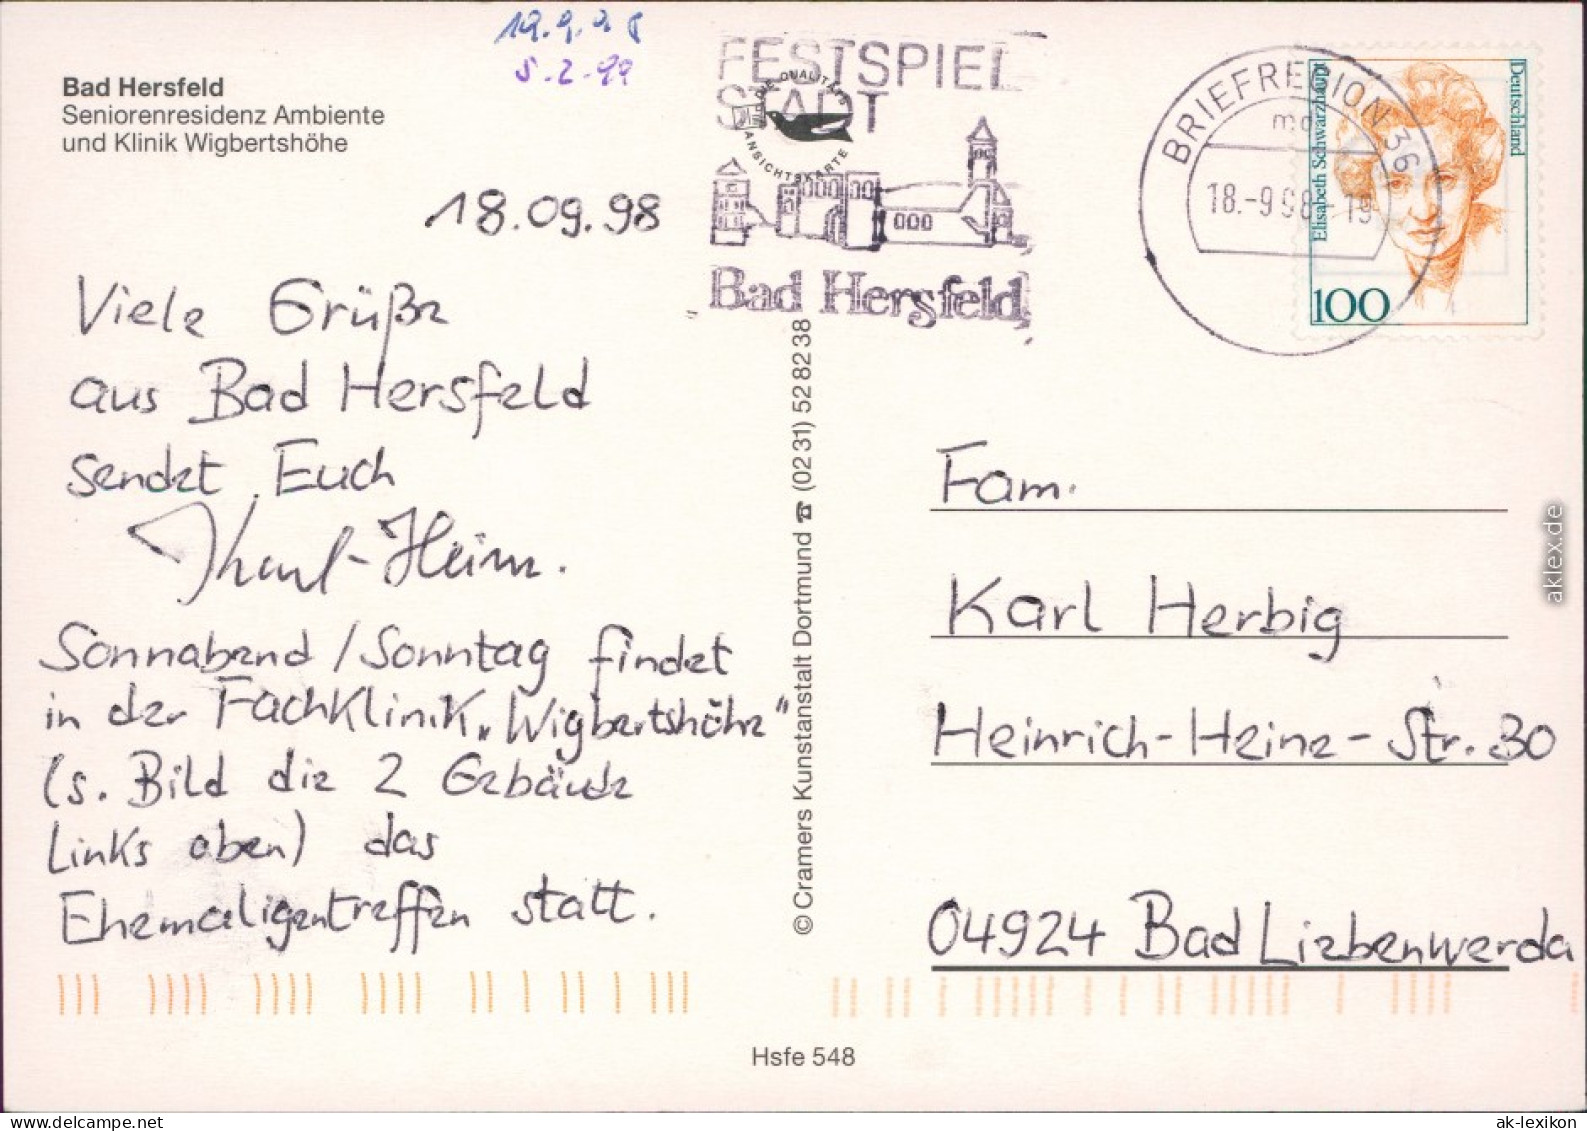 Bad Hersfeld Klinik Wigbertshöhe Und Seniorenresidenz Ambiente (Luftbild) 1998 - Bad Hersfeld